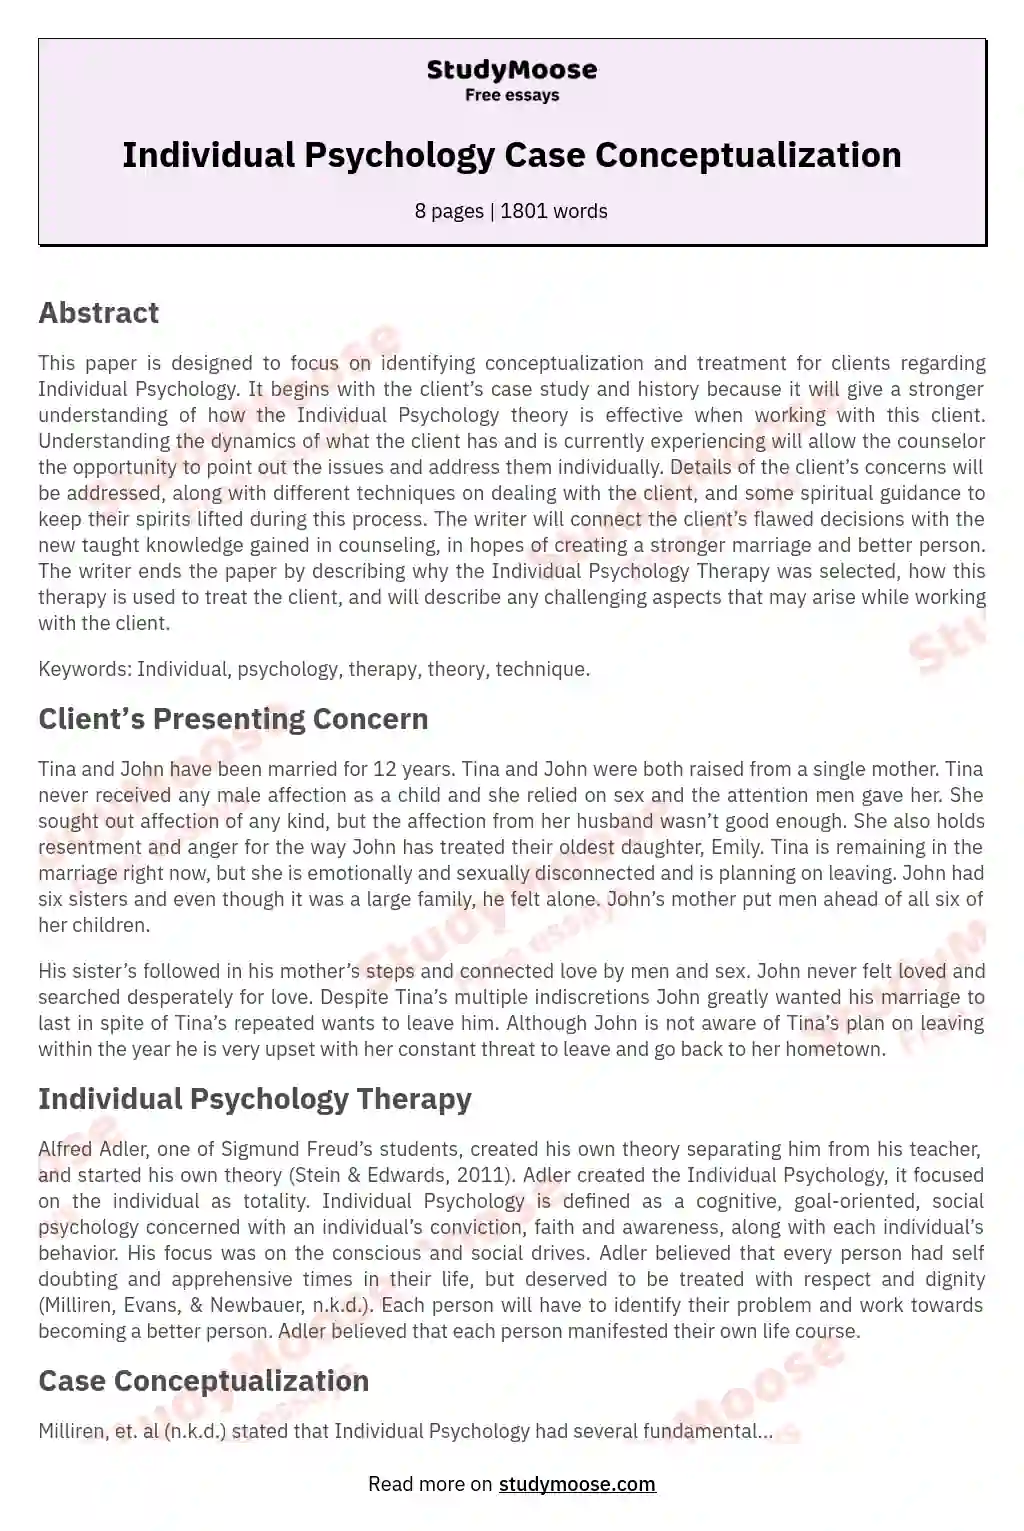 Individual Psychology Case Conceptualization essay